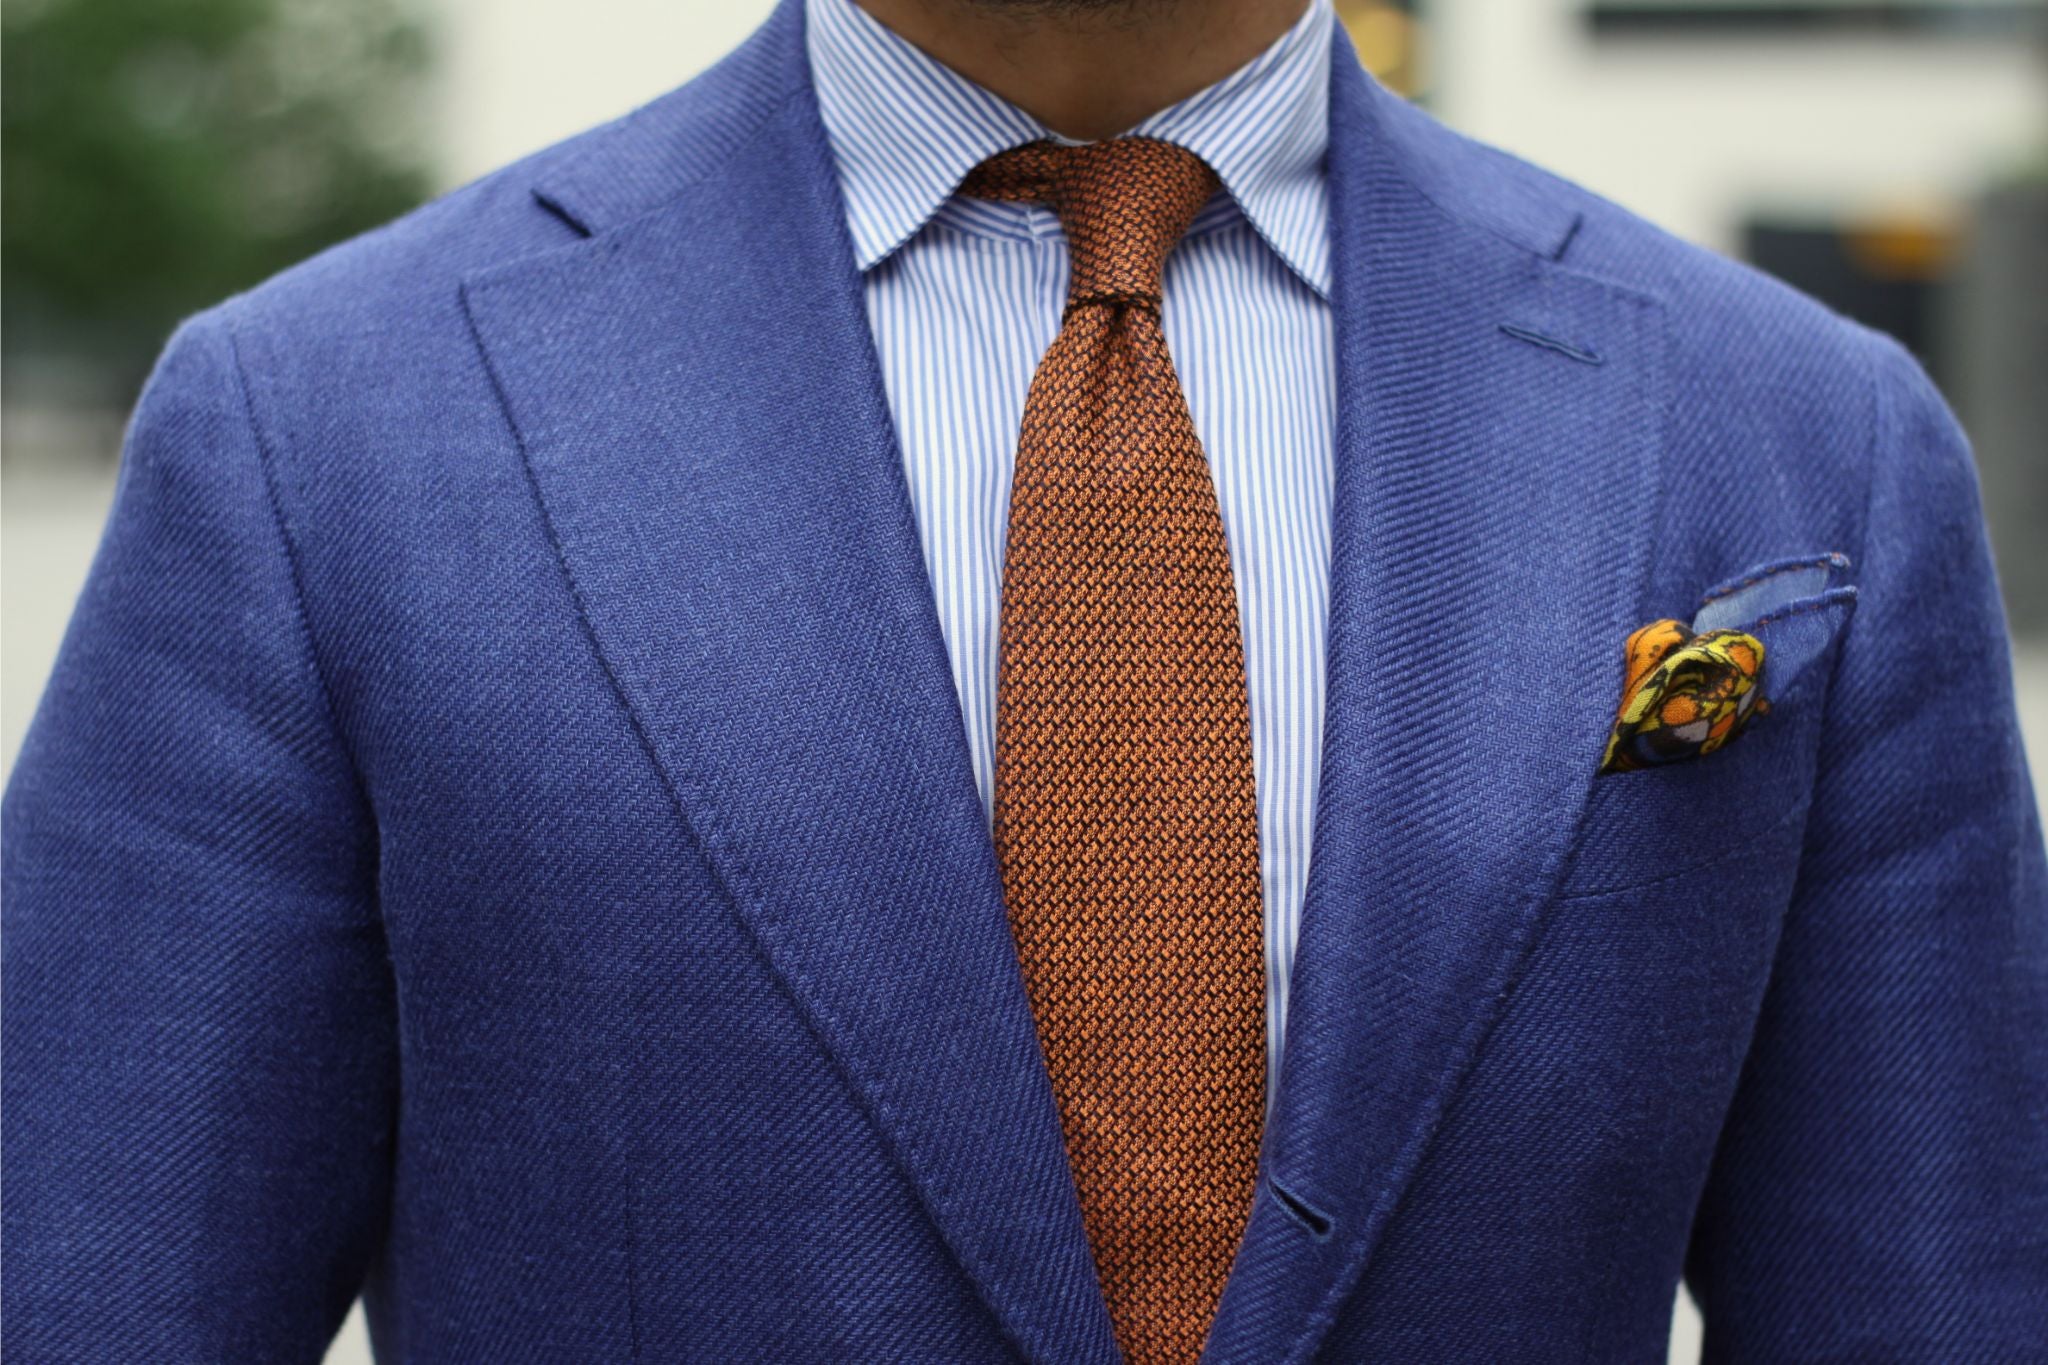 Orange tie with blue suit - close-up